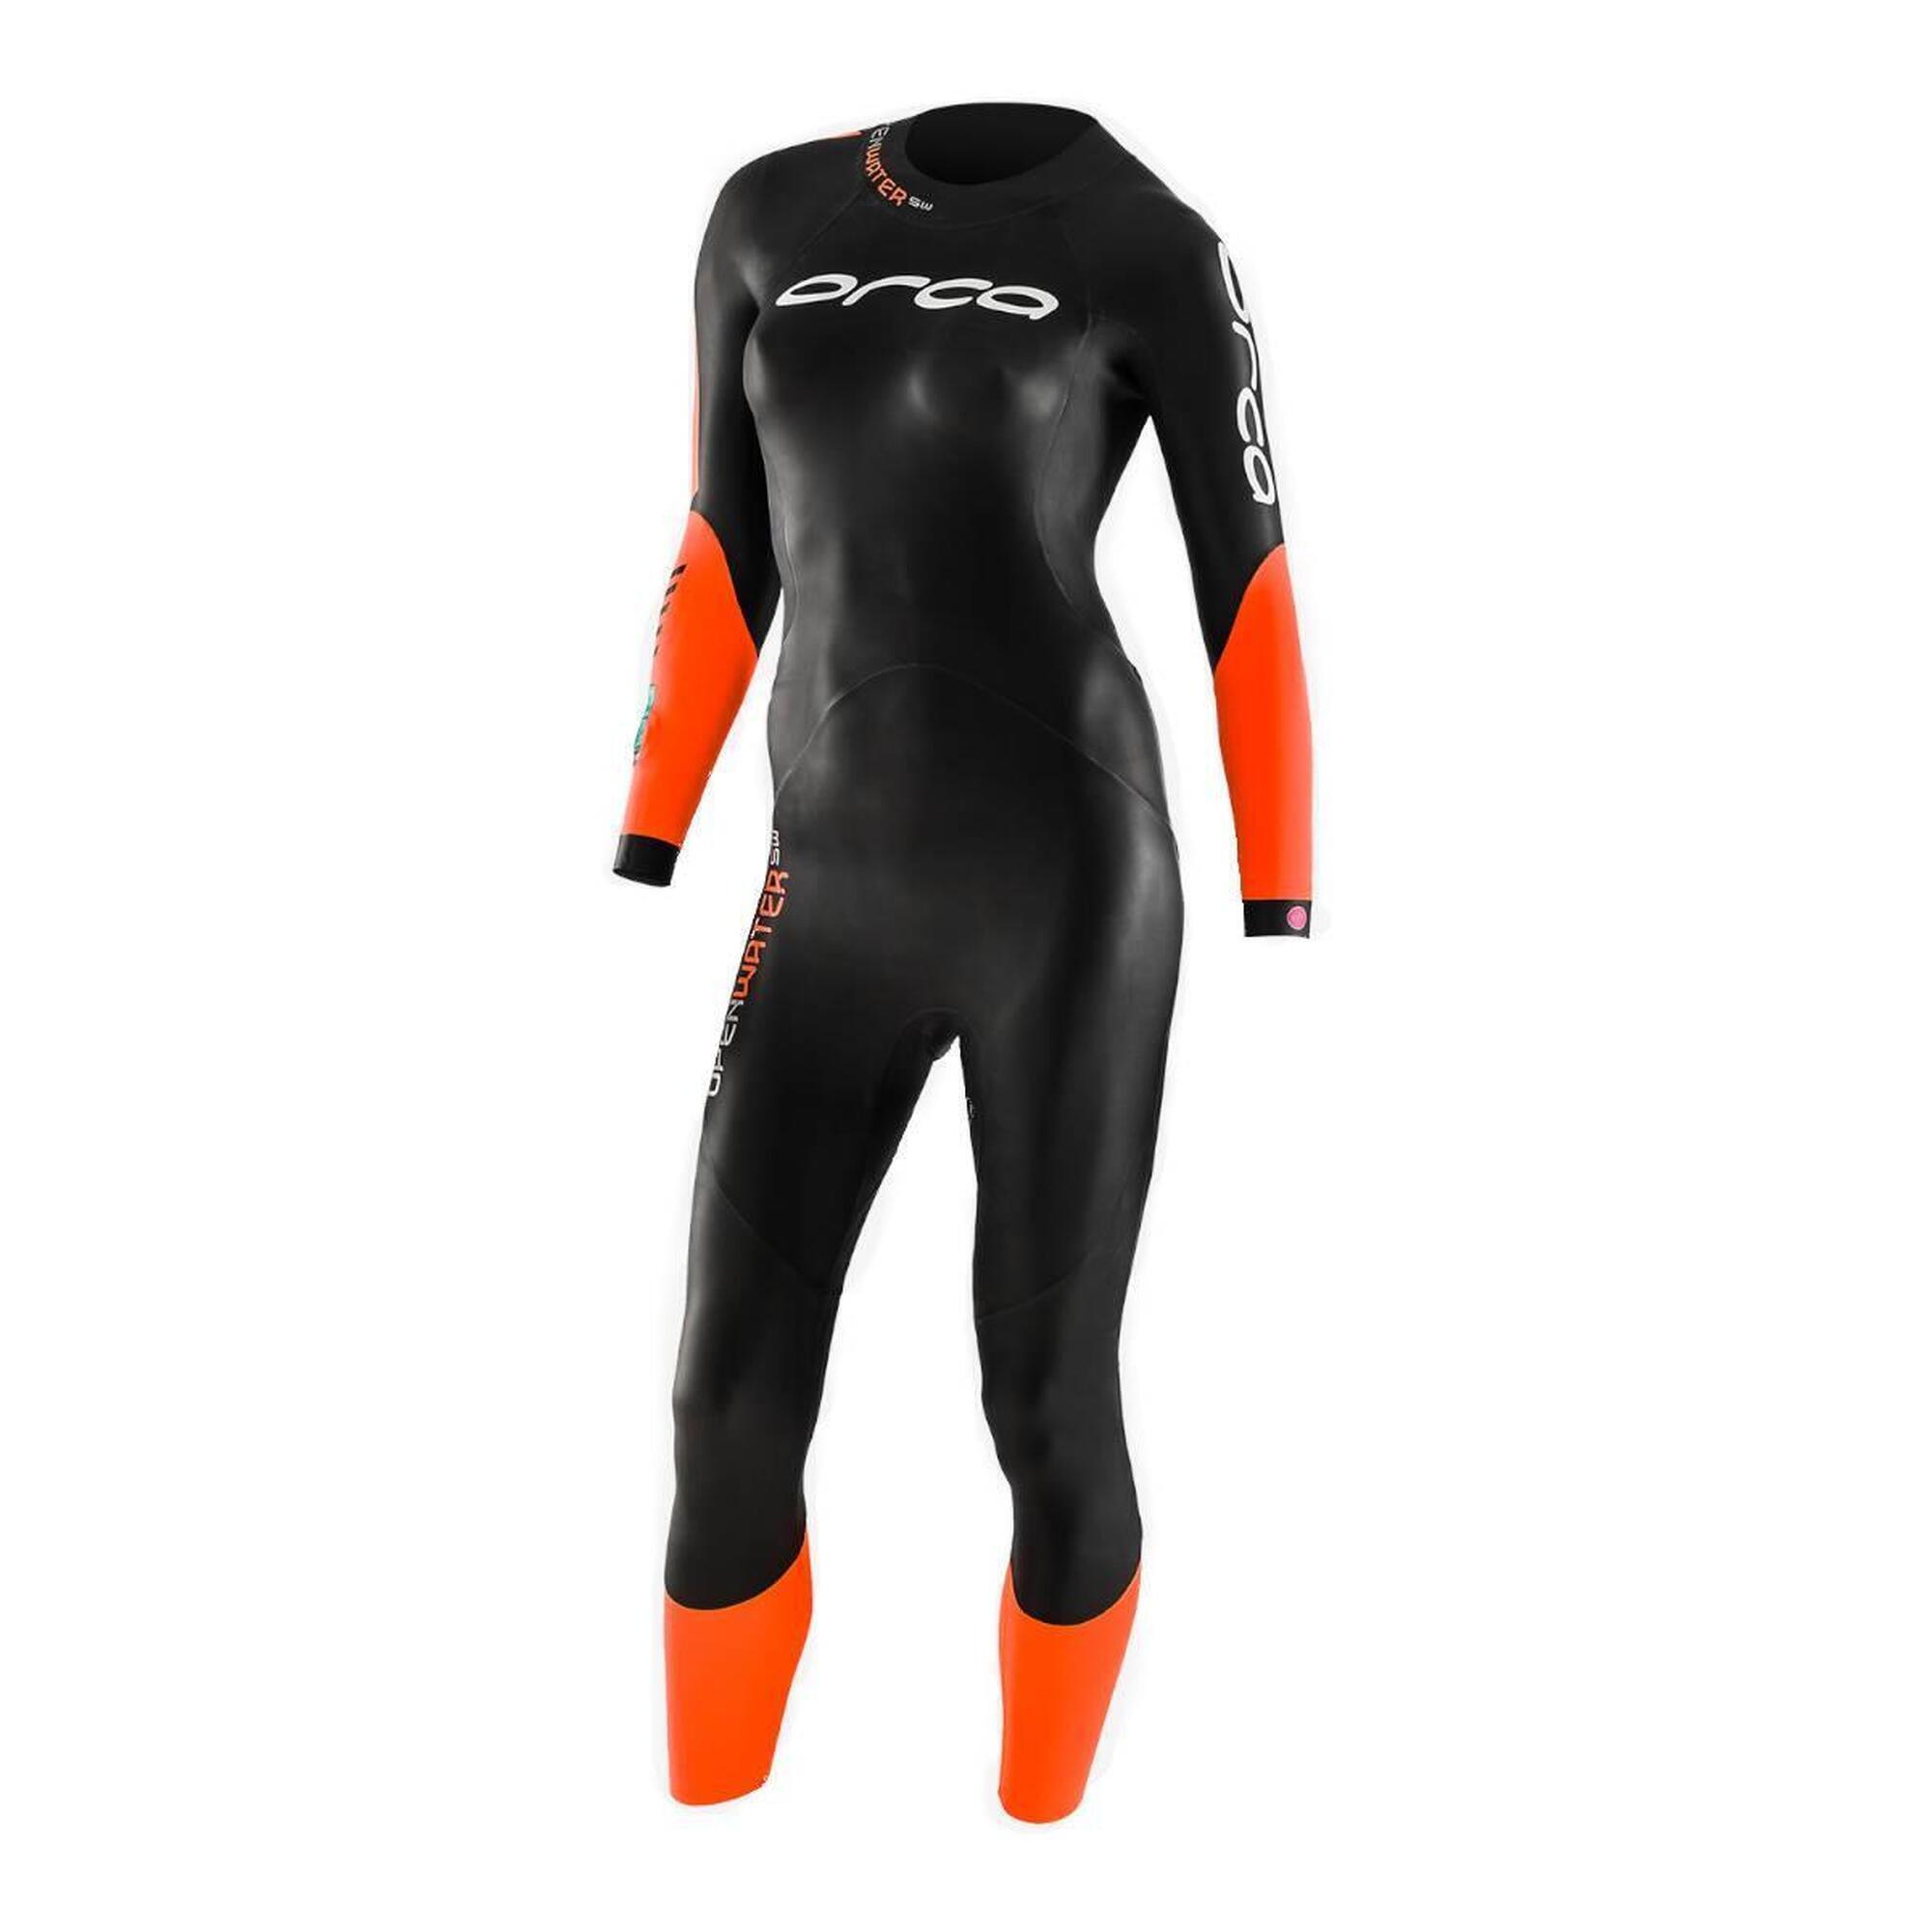 Orca Women's Openwater Smart Wetsuit - Black/ Orange - Size XS 1/3